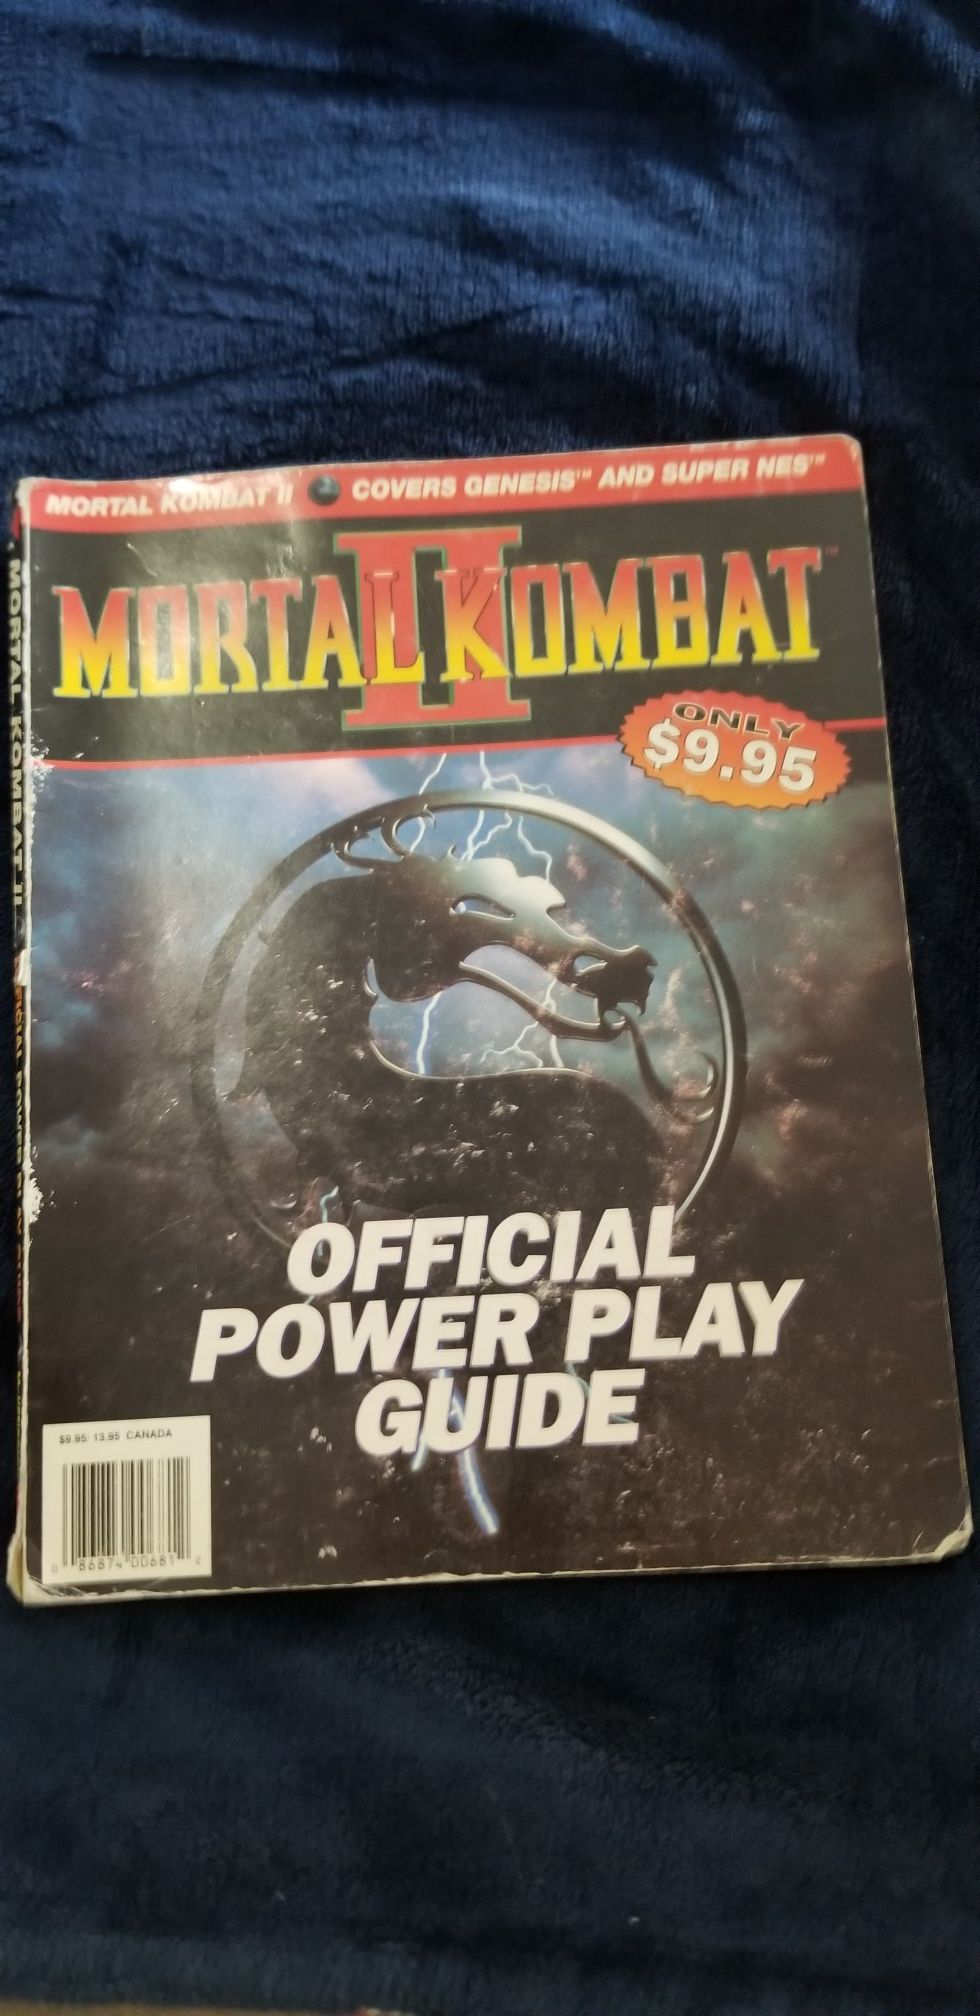 Mortal Kombat II Official Power Play Guide